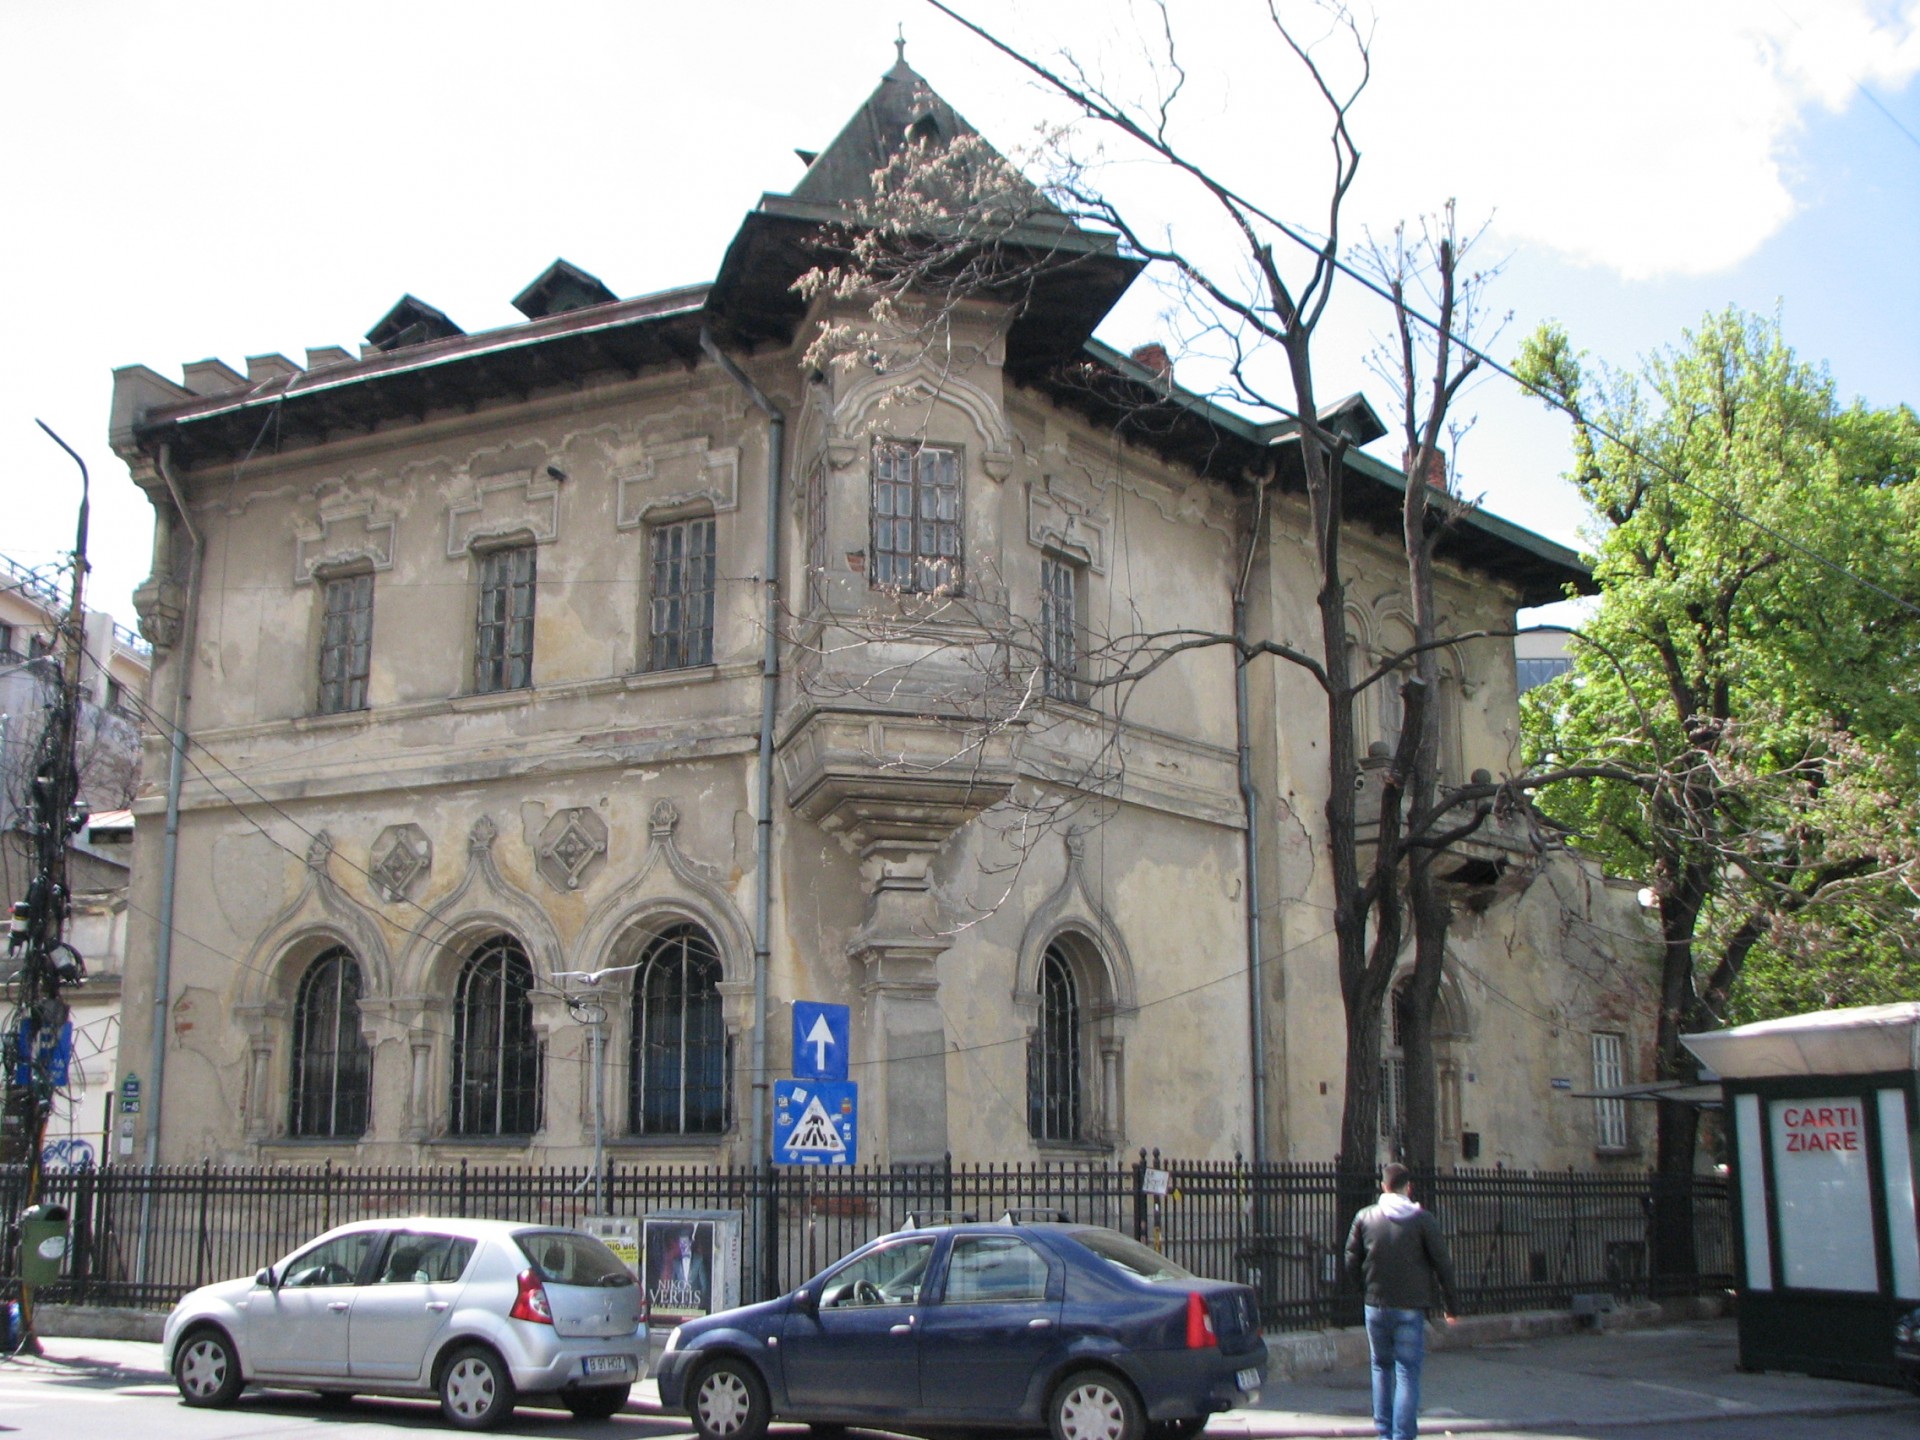 Casa N Petrascu